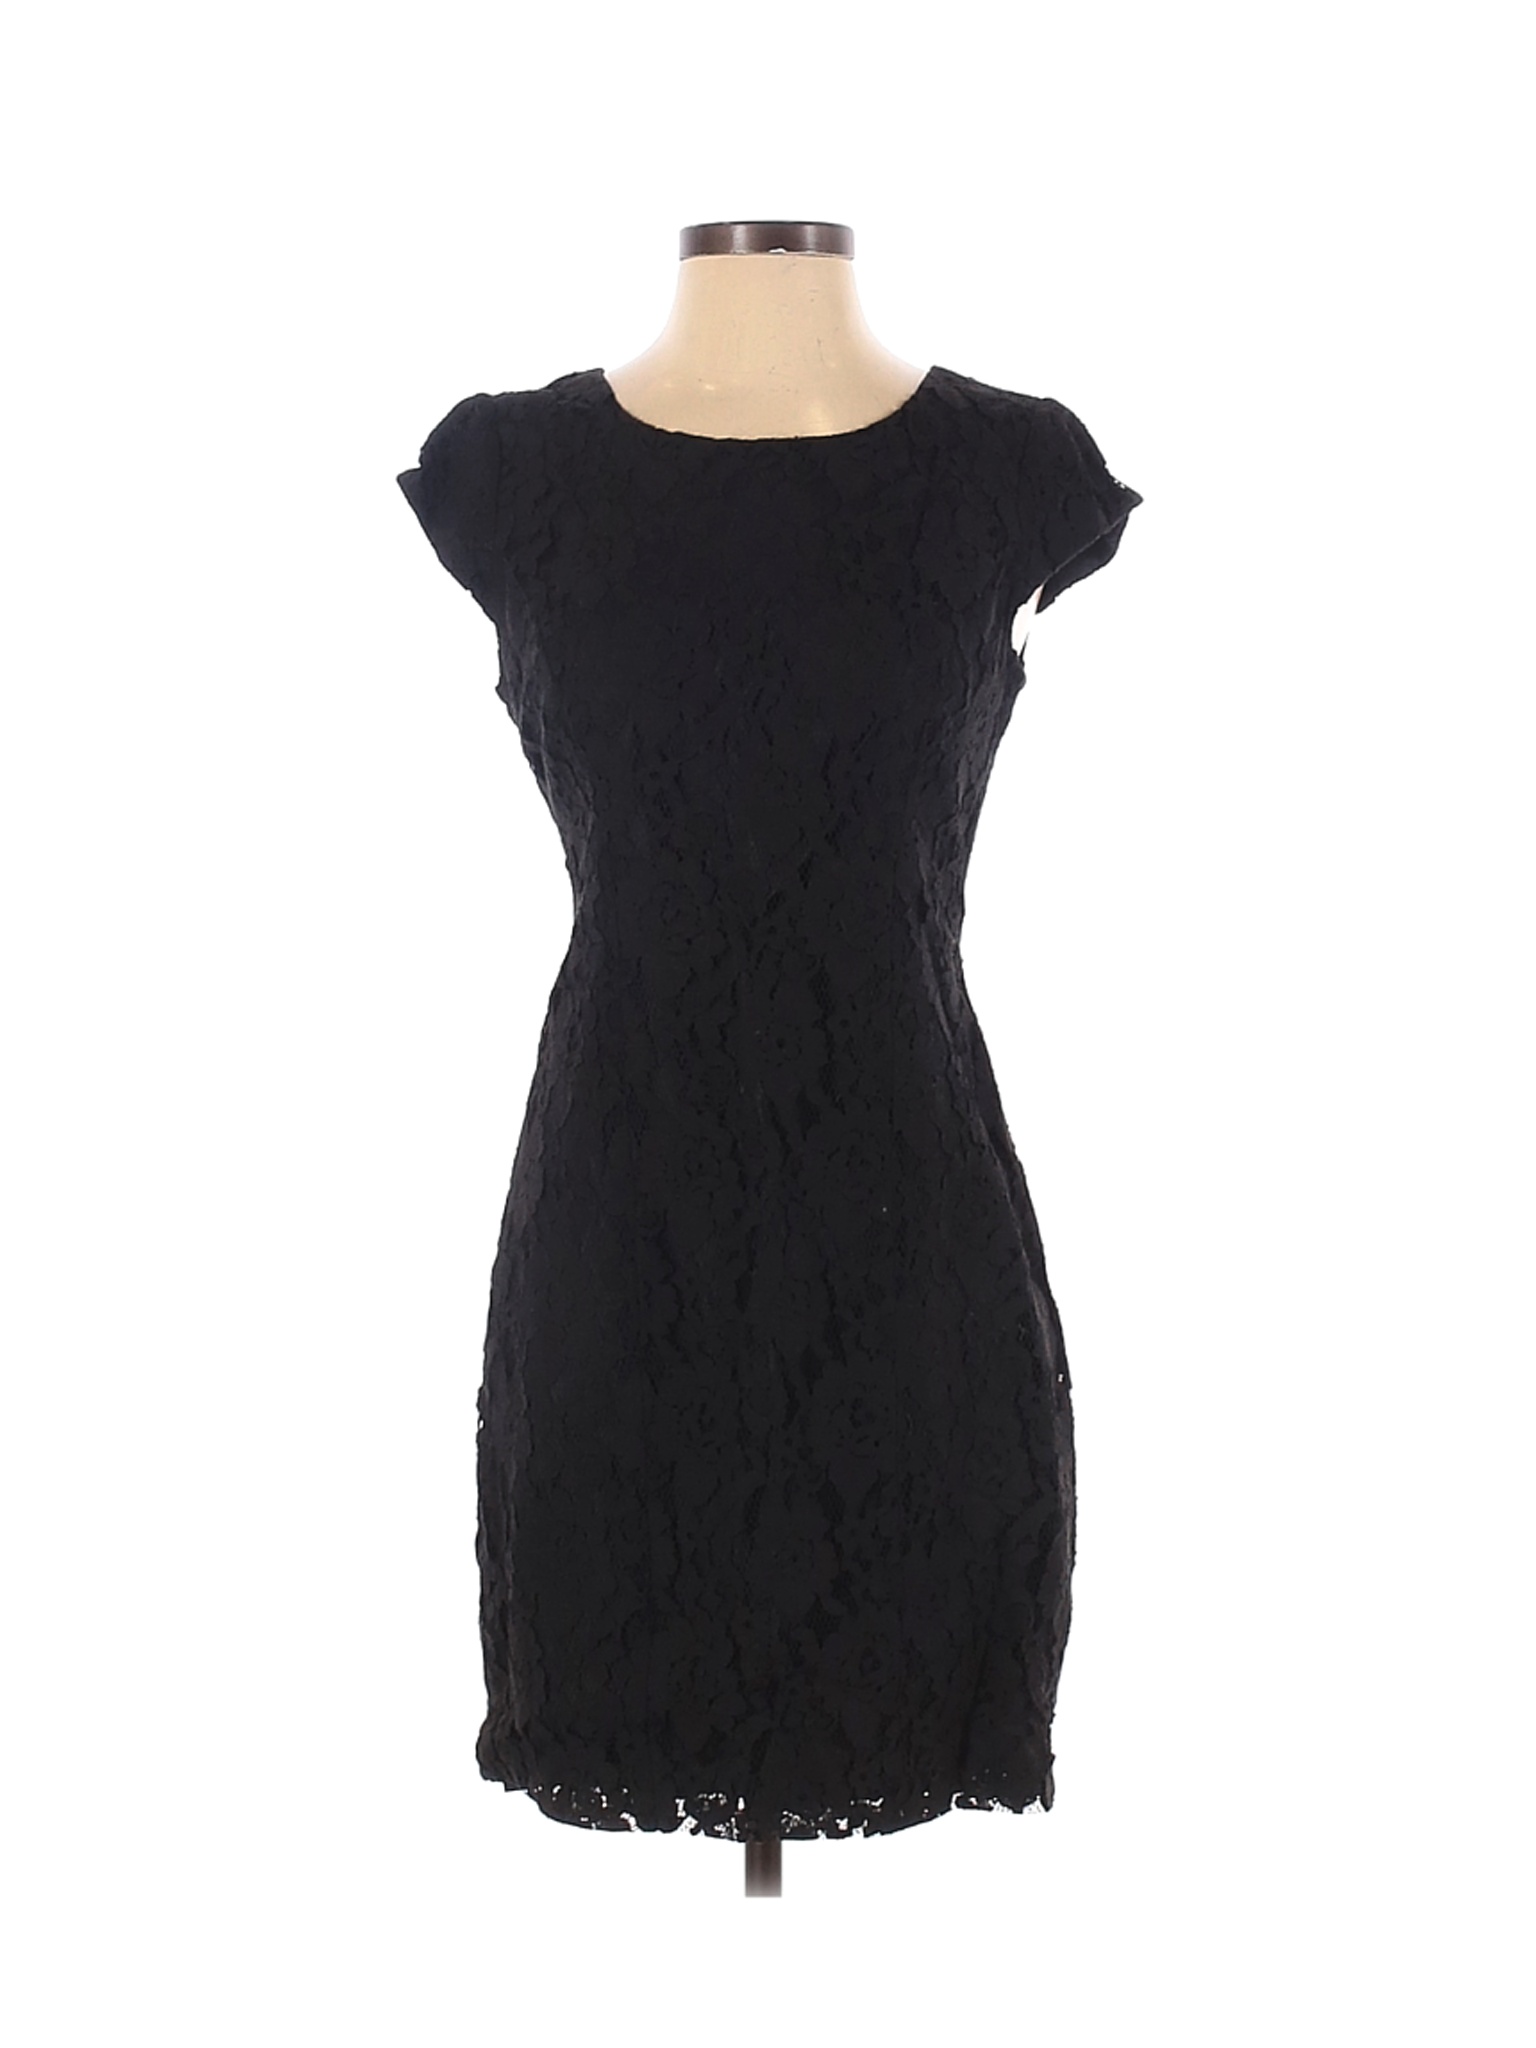 J.Crew Women Black Cocktail Dress 2 | eBay